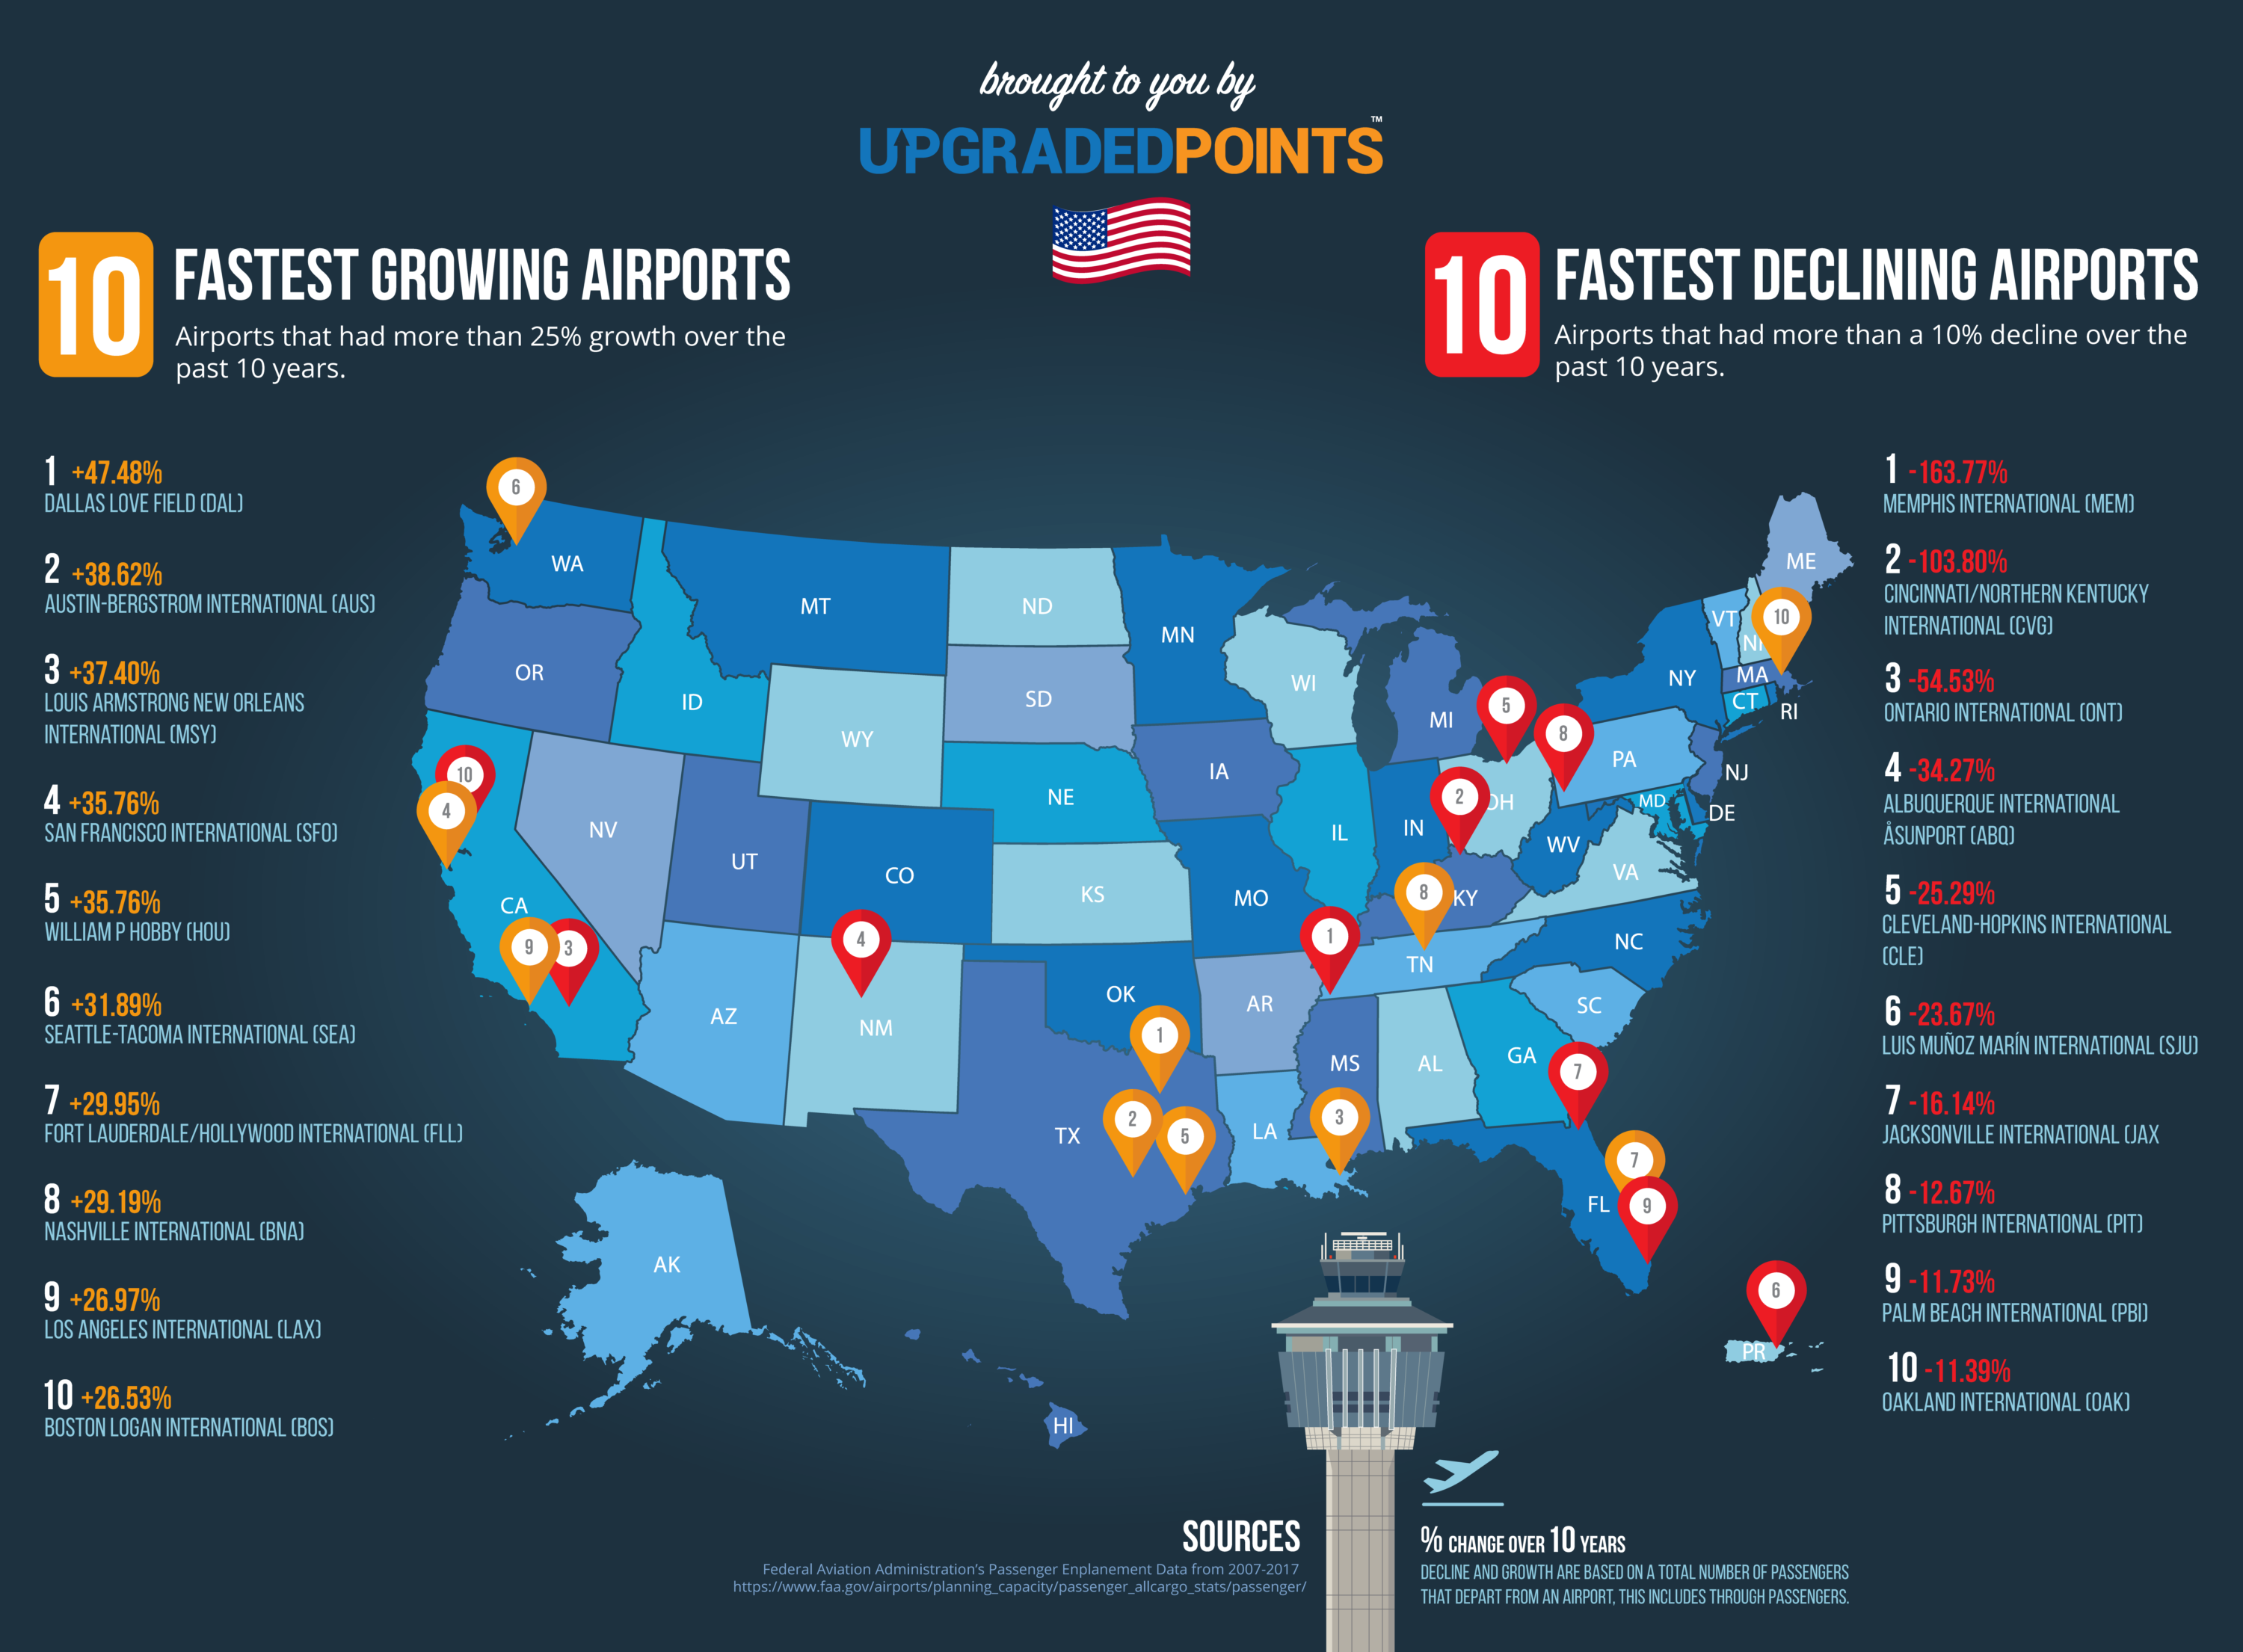 major airports near baltimore